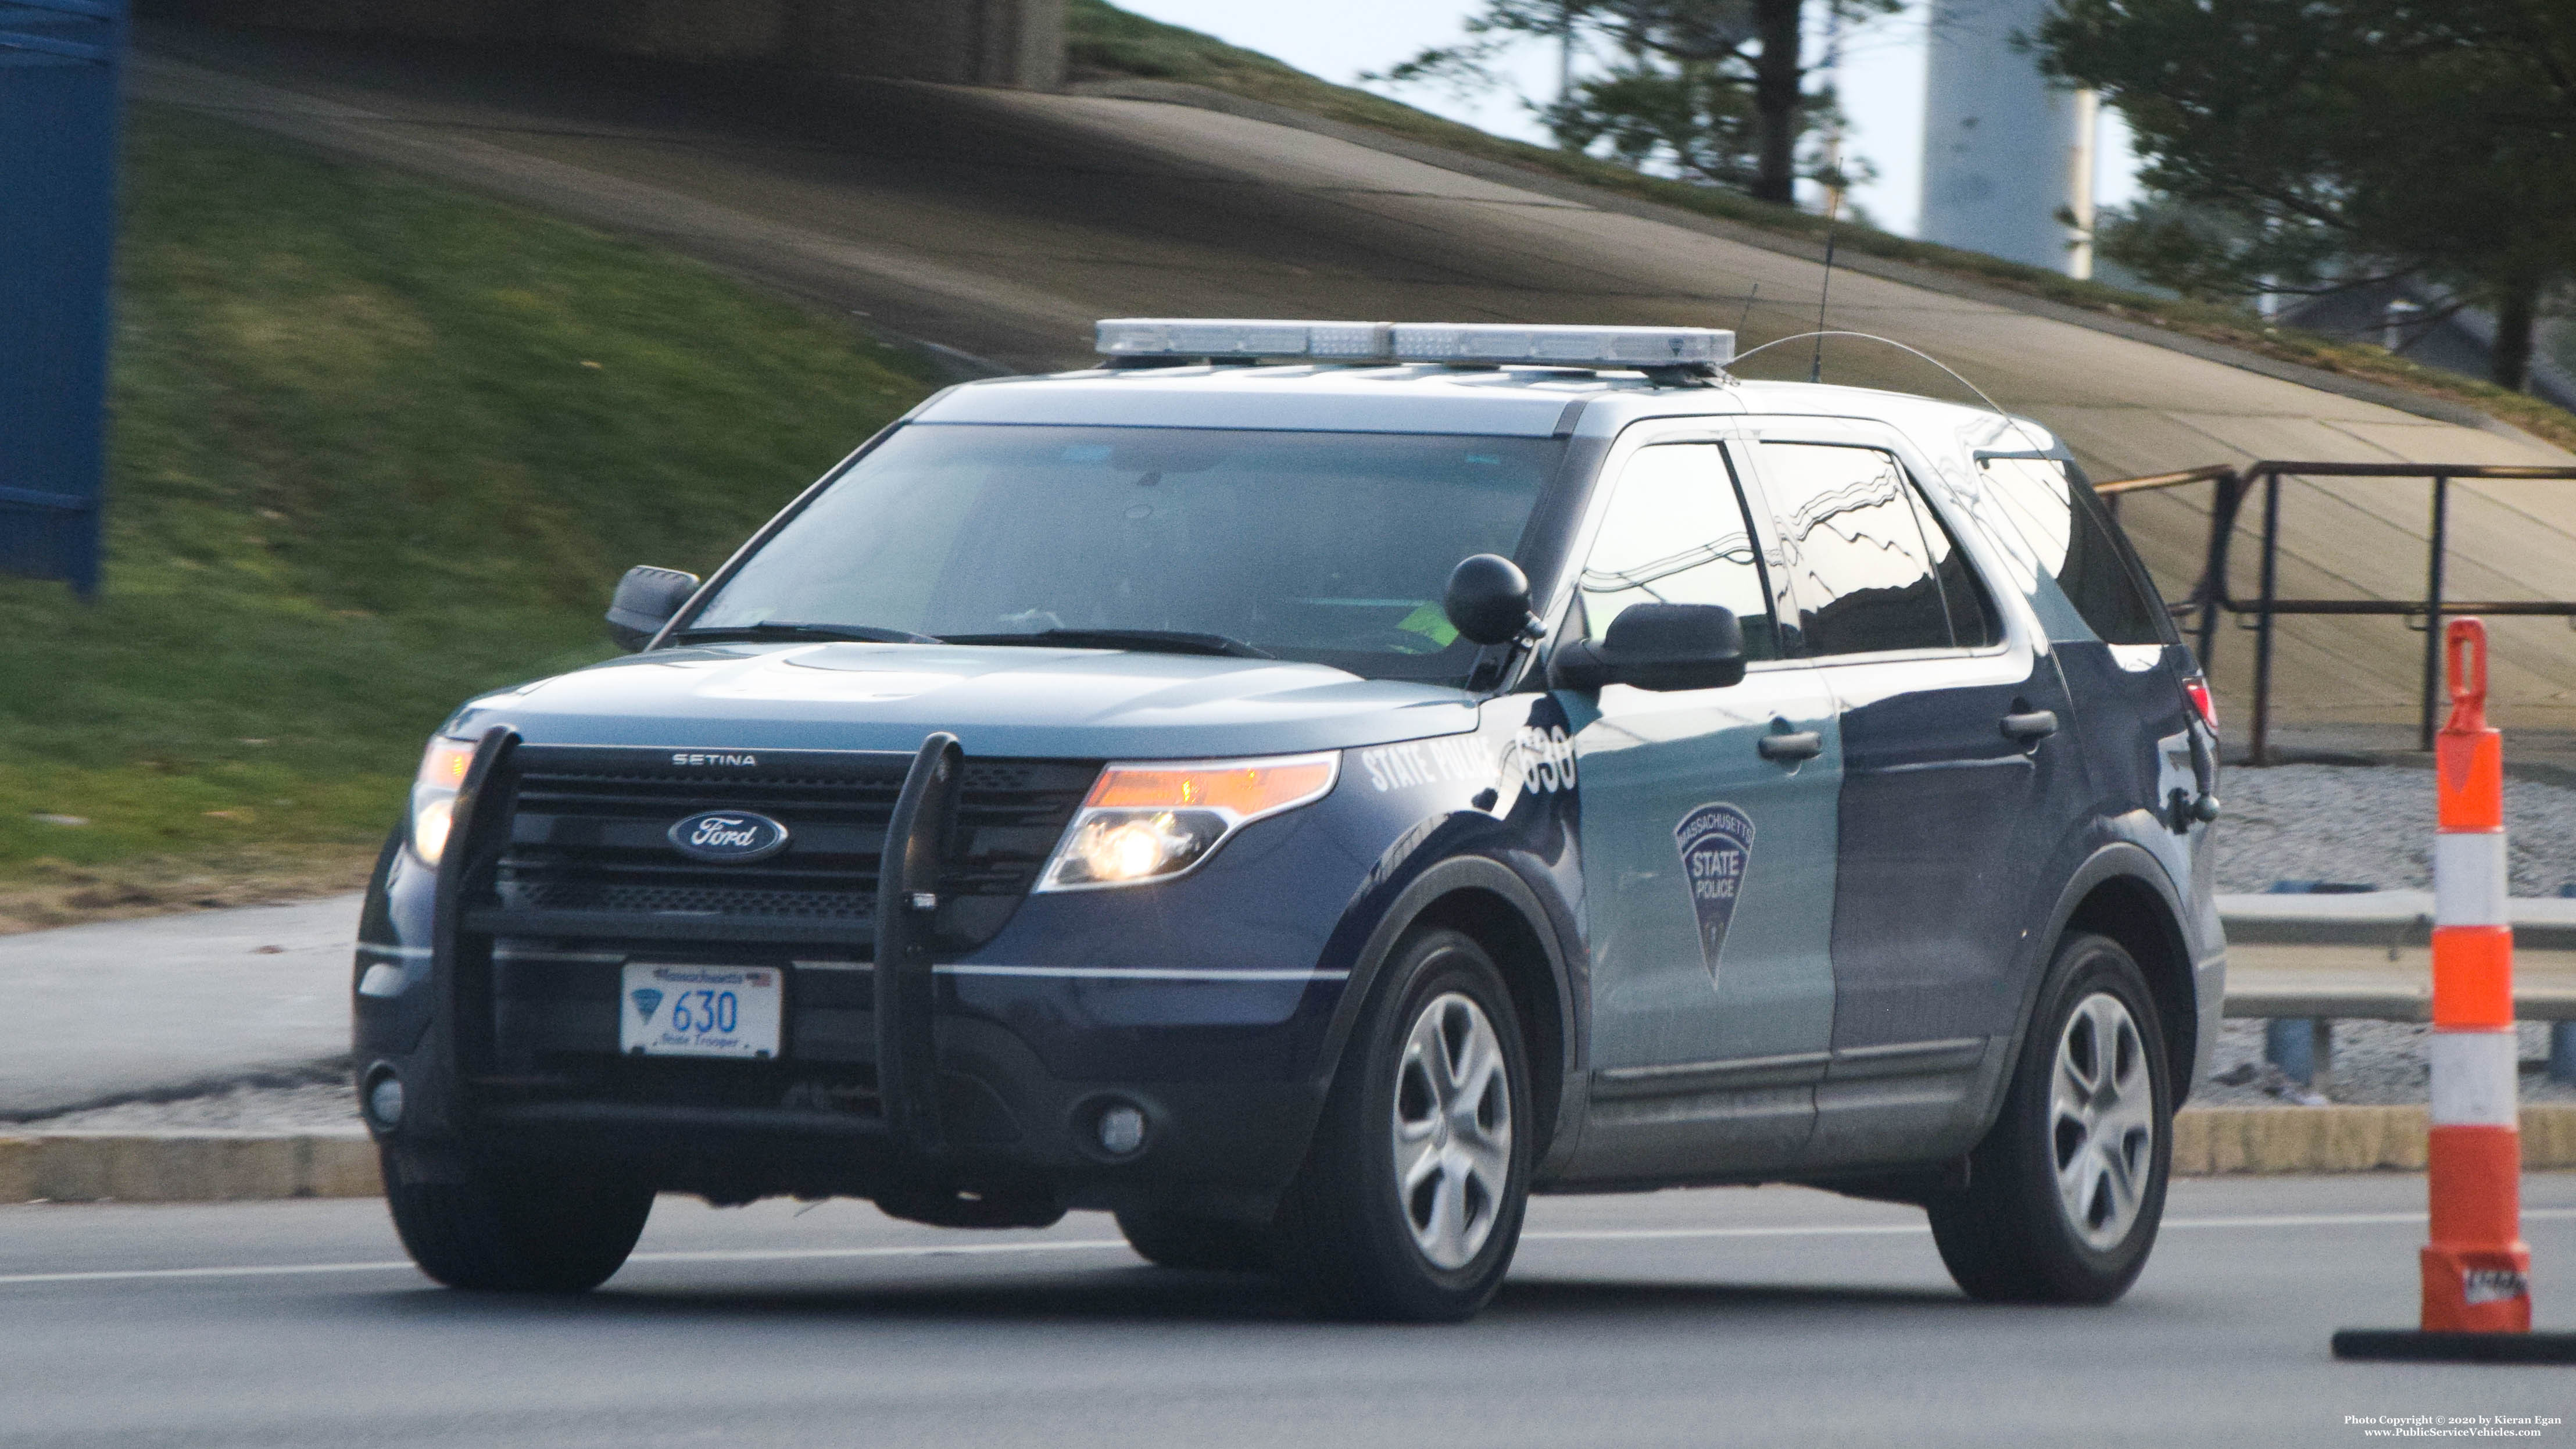 A photo  of Massachusetts State Police
            Cruiser 630, a 2015 Ford Police Interceptor Utility             taken by Kieran Egan